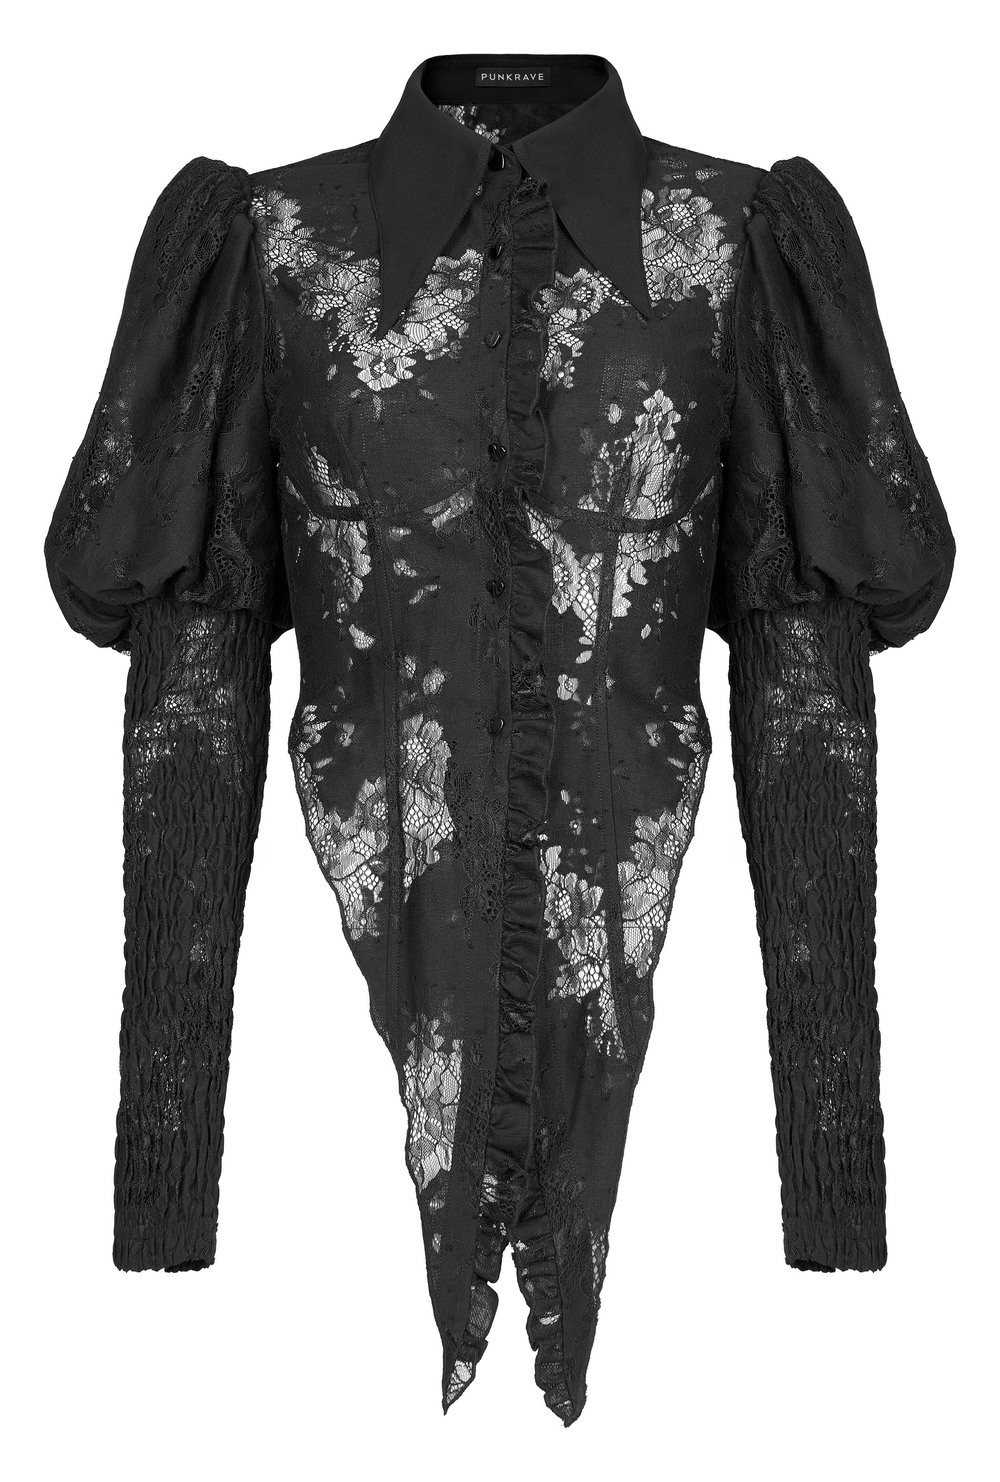 Women's Victorian Lace Gothic Black Tie-Back Shirt